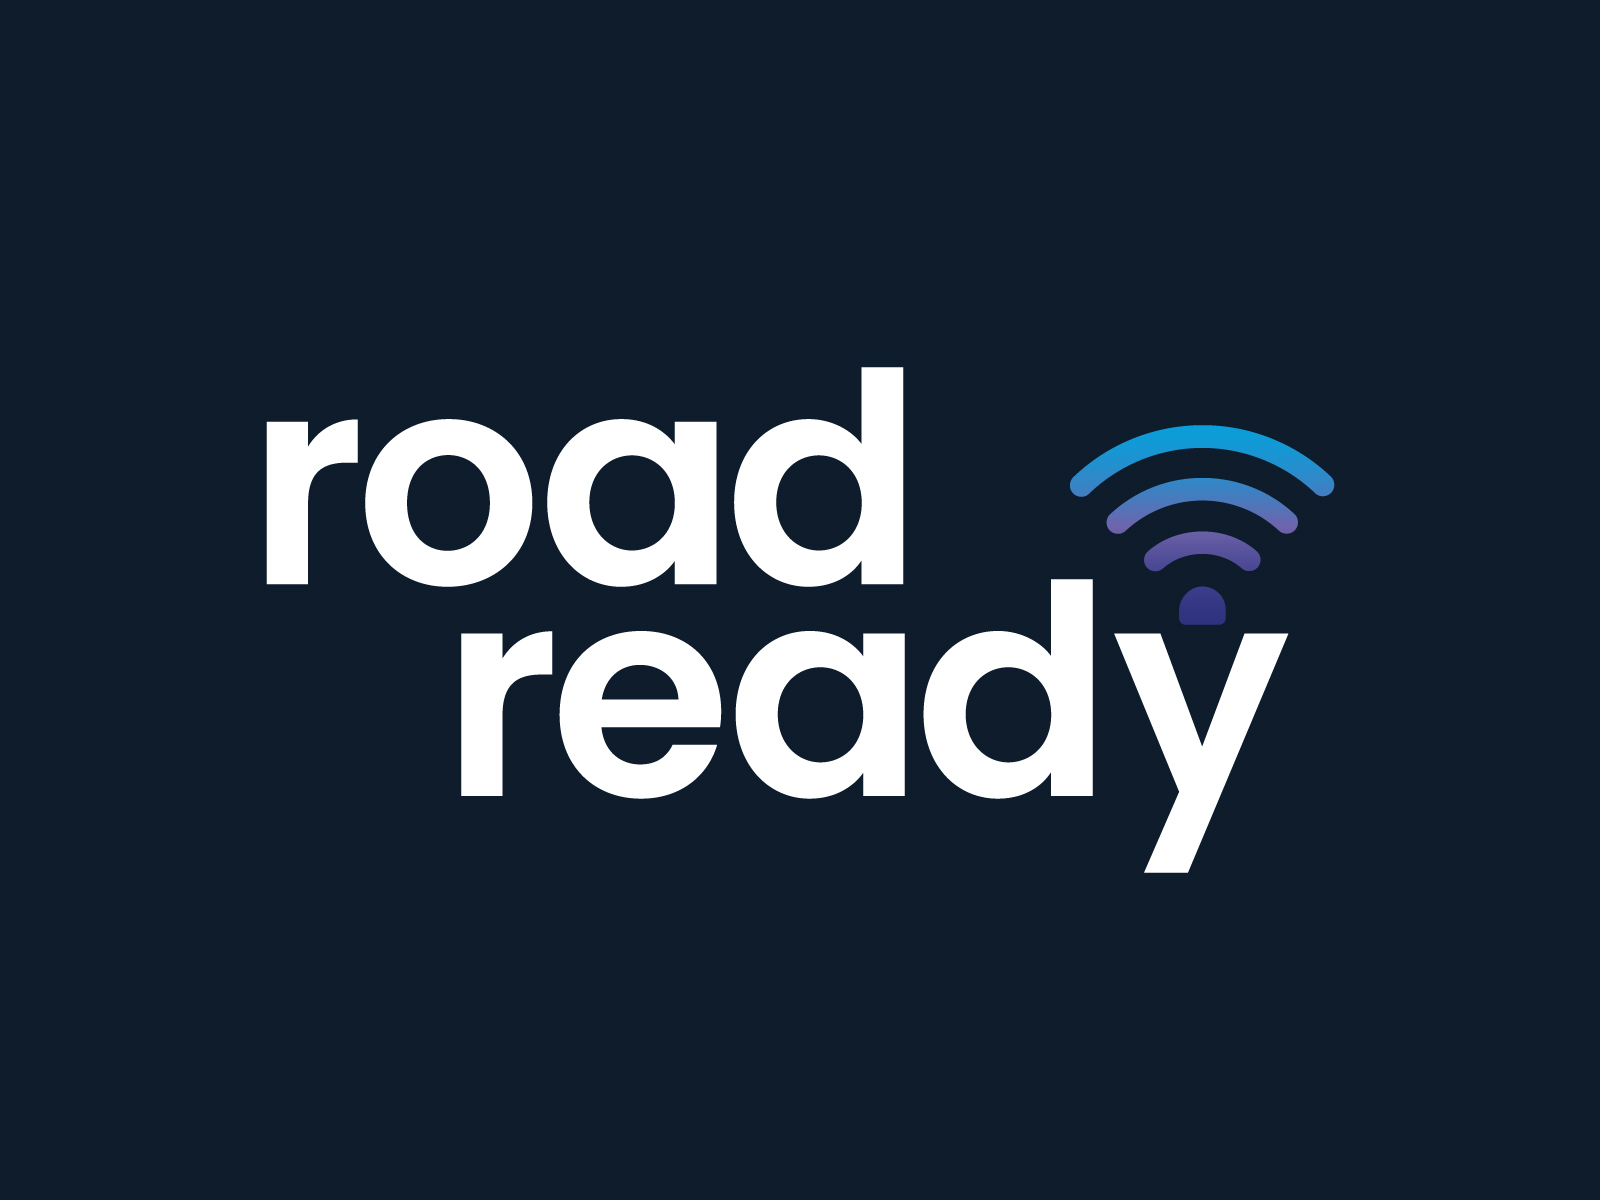 Road Ready / 02 by Fathom Creative on Dribbble